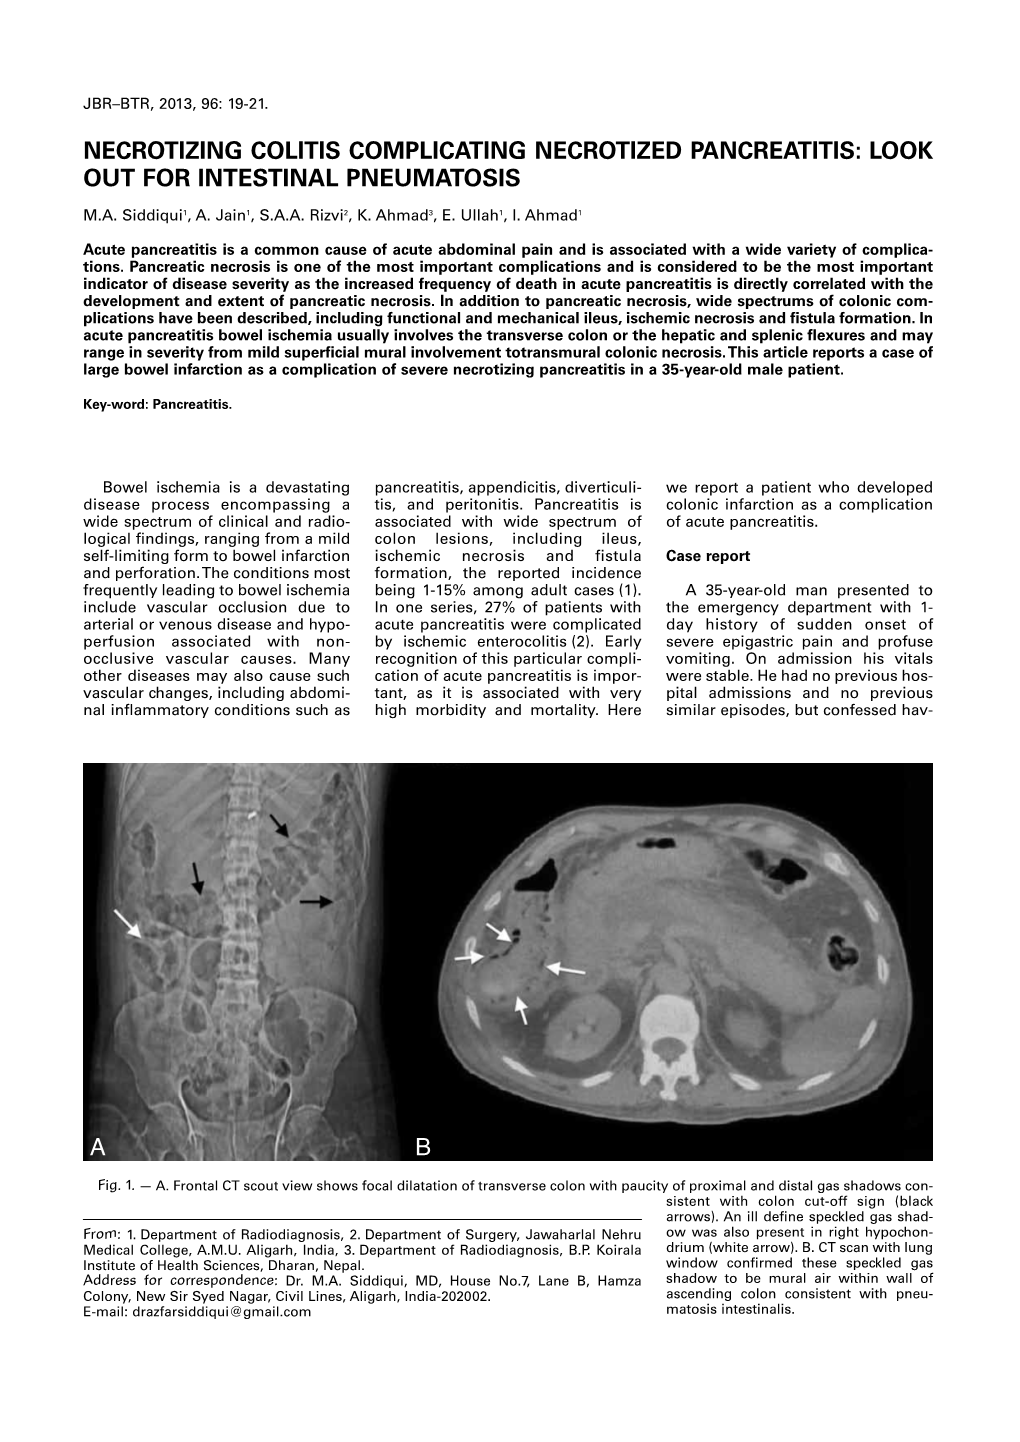 Necrotizing Colitis Complicating Necrotized Pancreatitis: Look out for Intestinal Pneumatosis